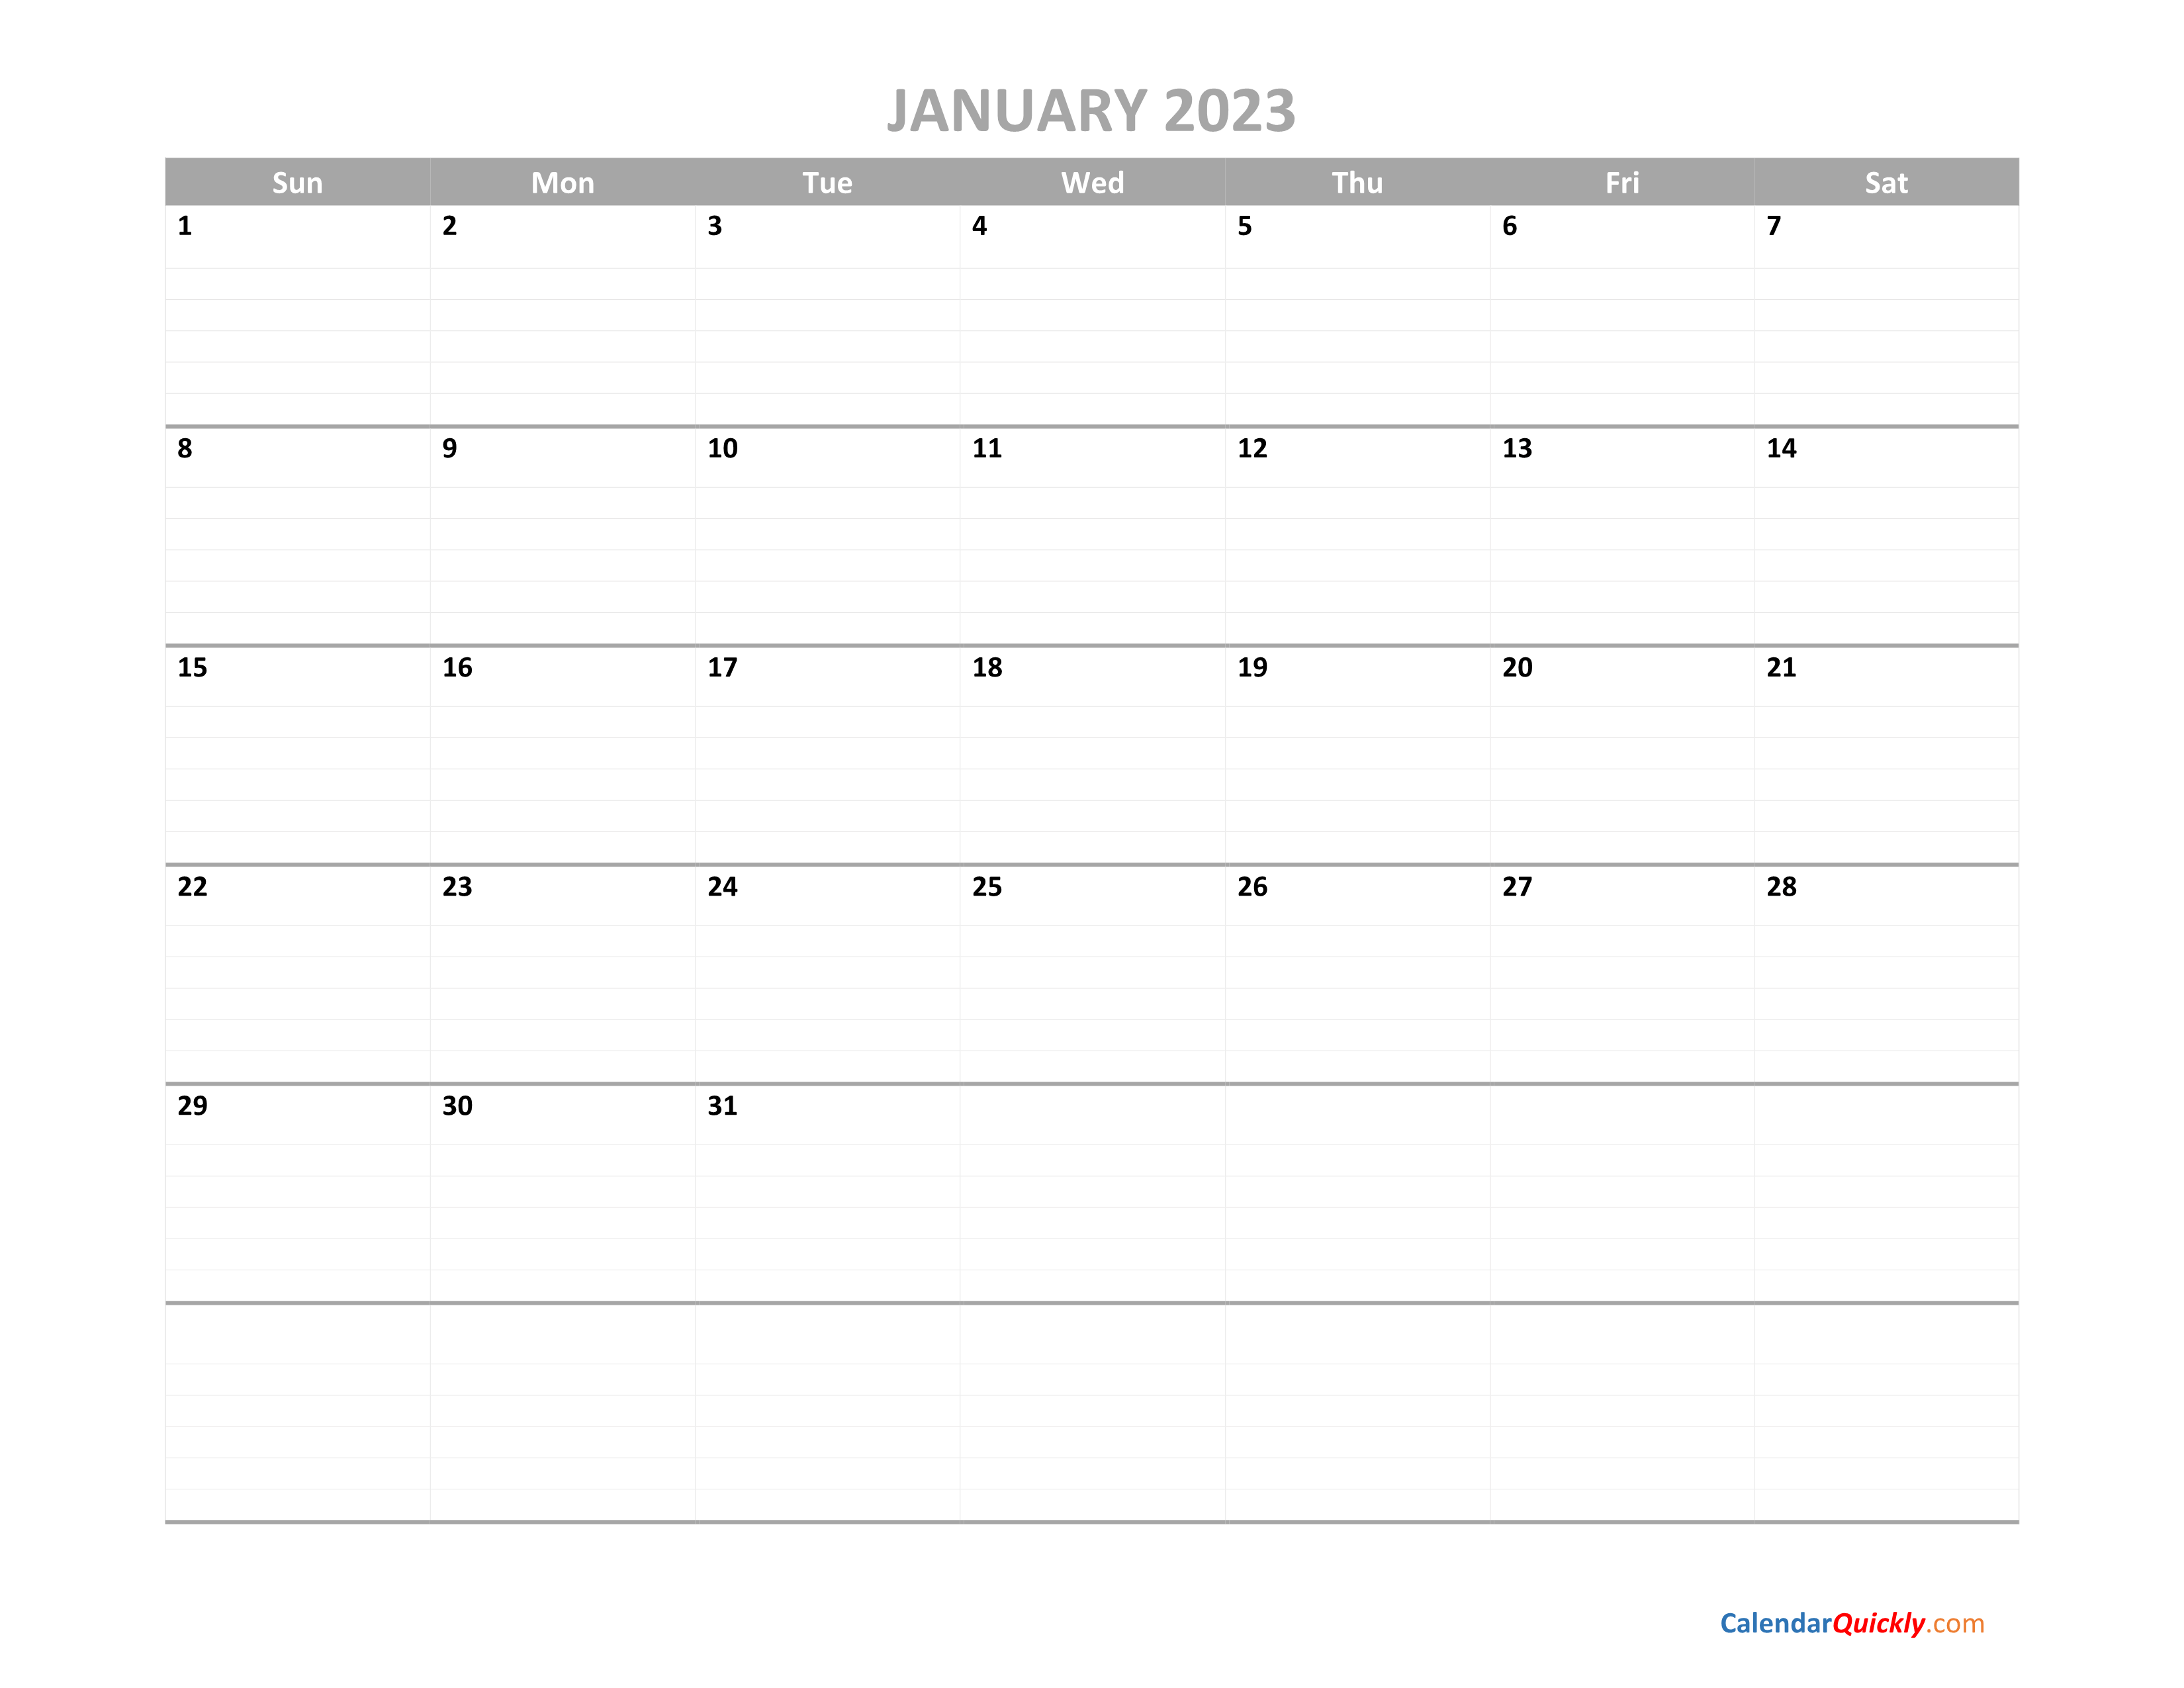 Monthly Calendar 2023 Printable | Calendar Quickly